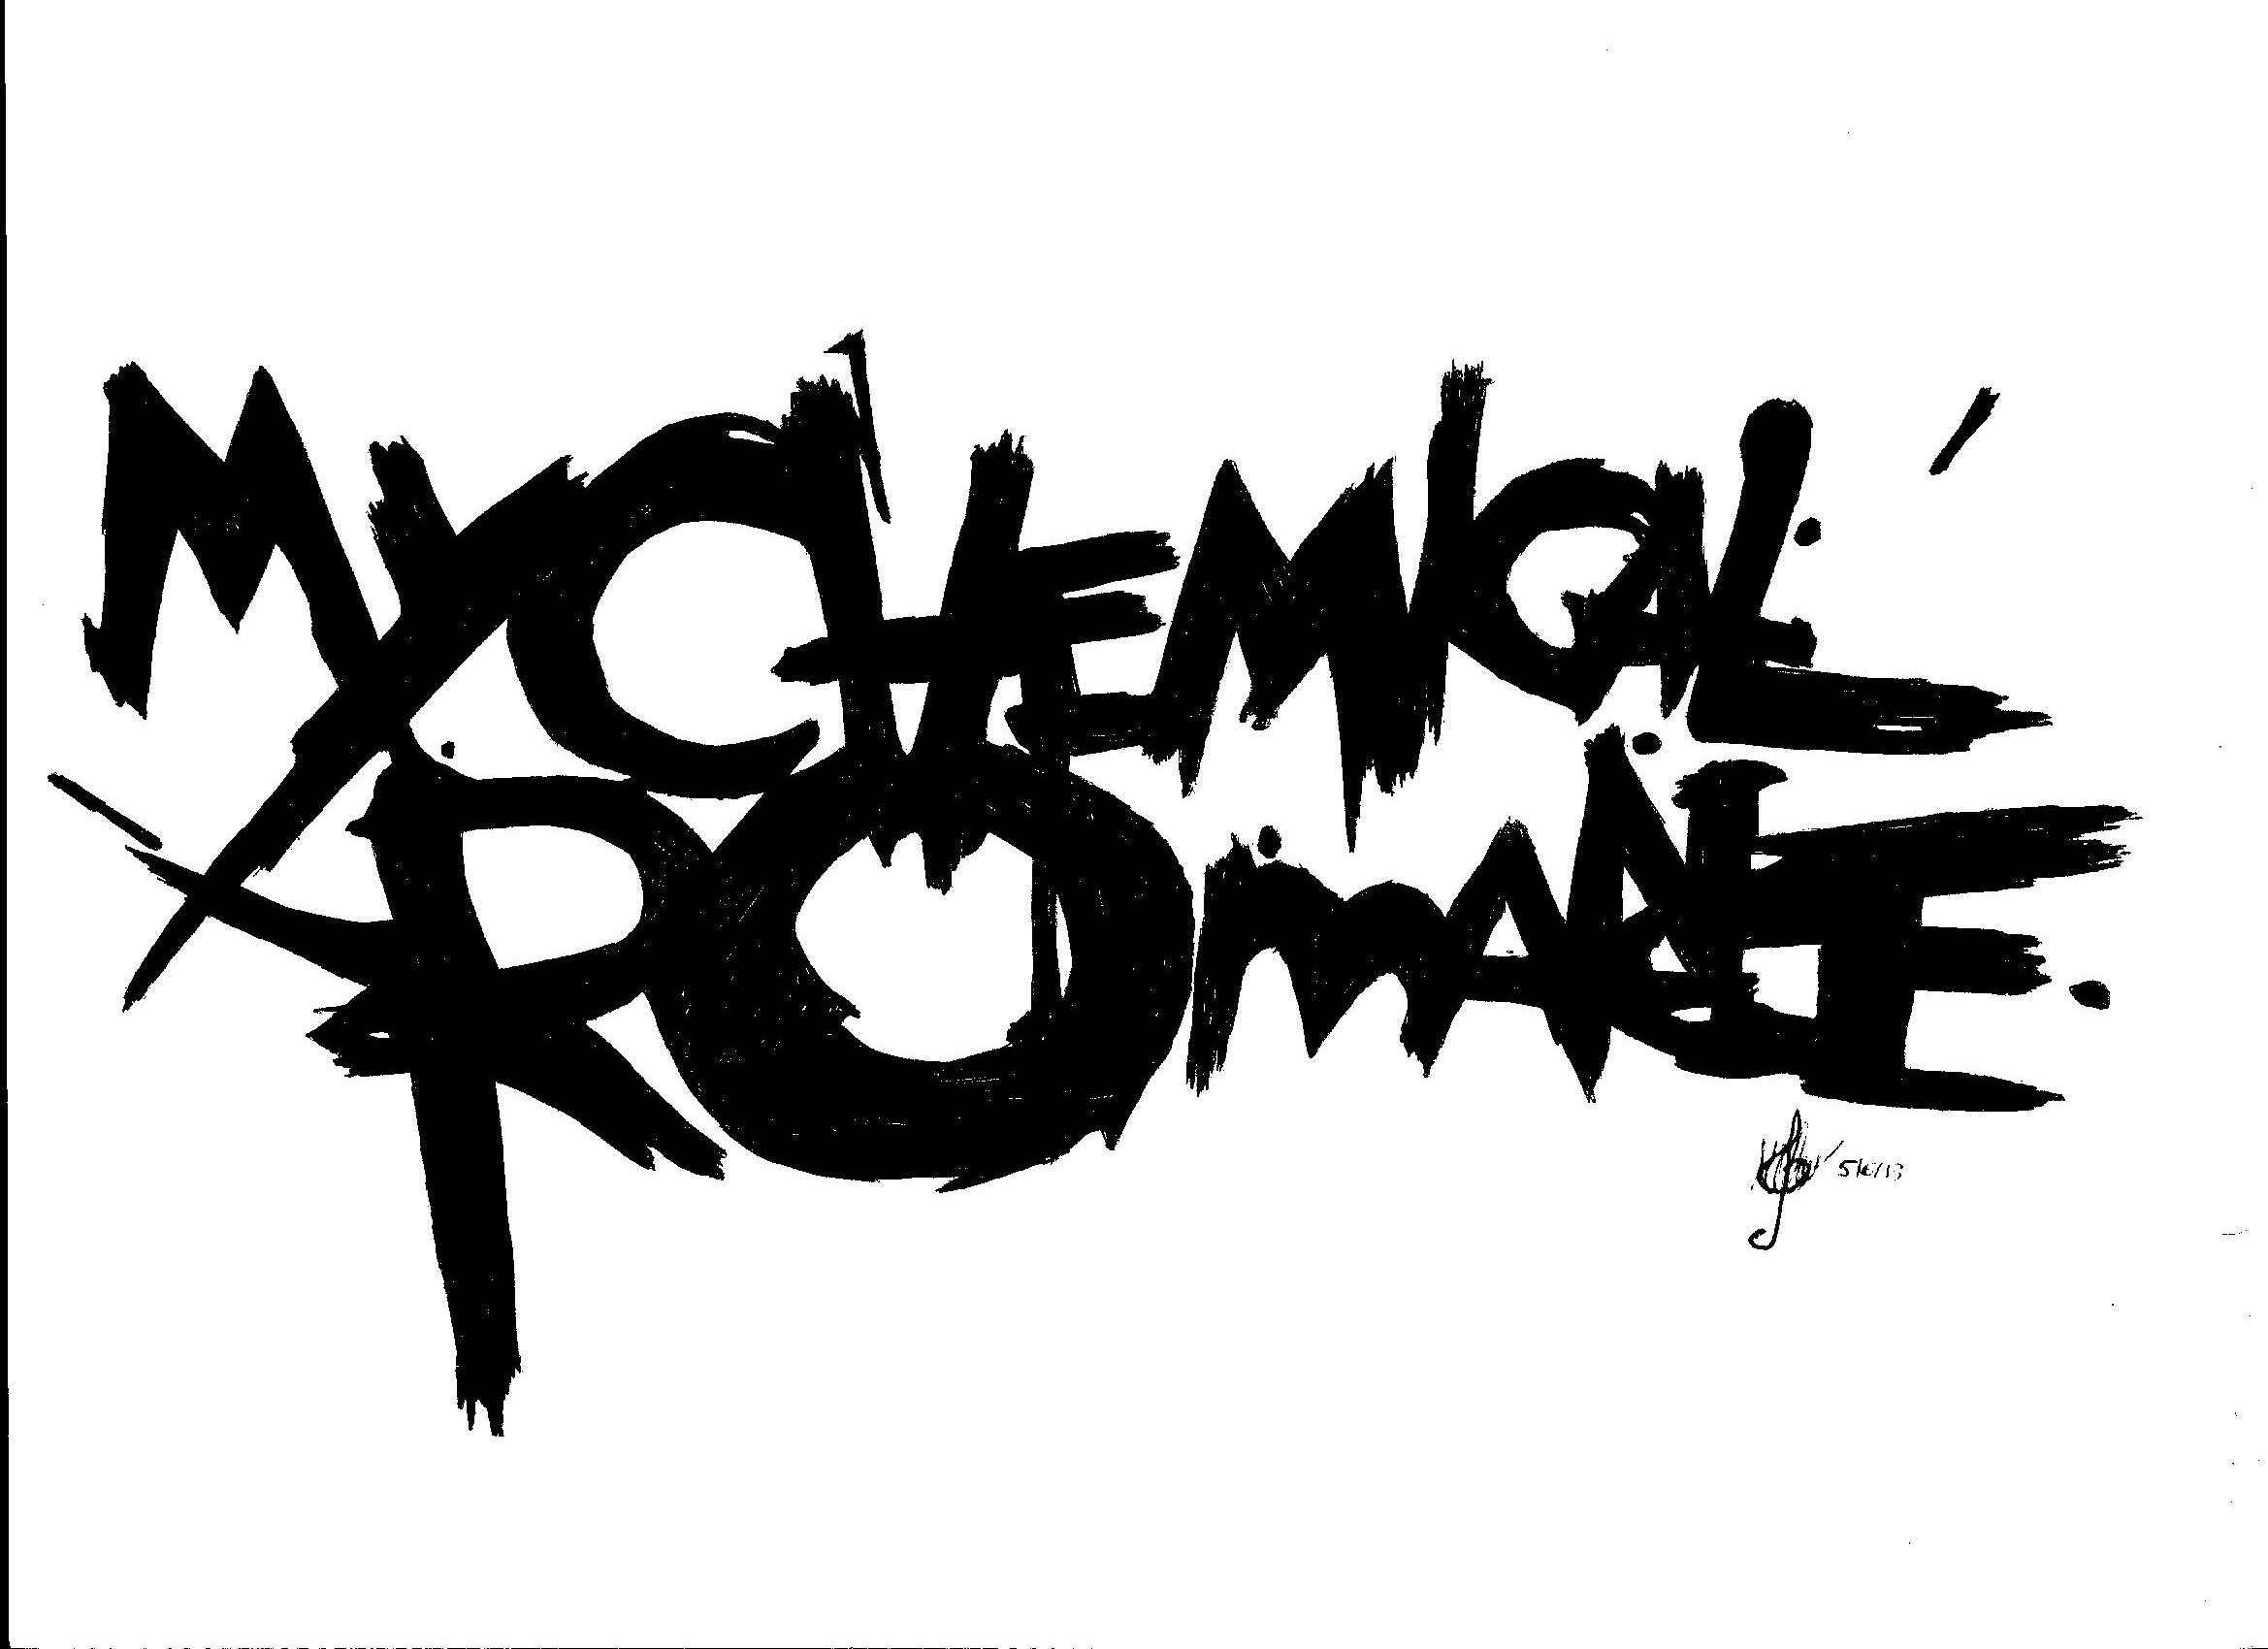 My Chemical Romance Logo by selvaya-guetta on DeviantArt